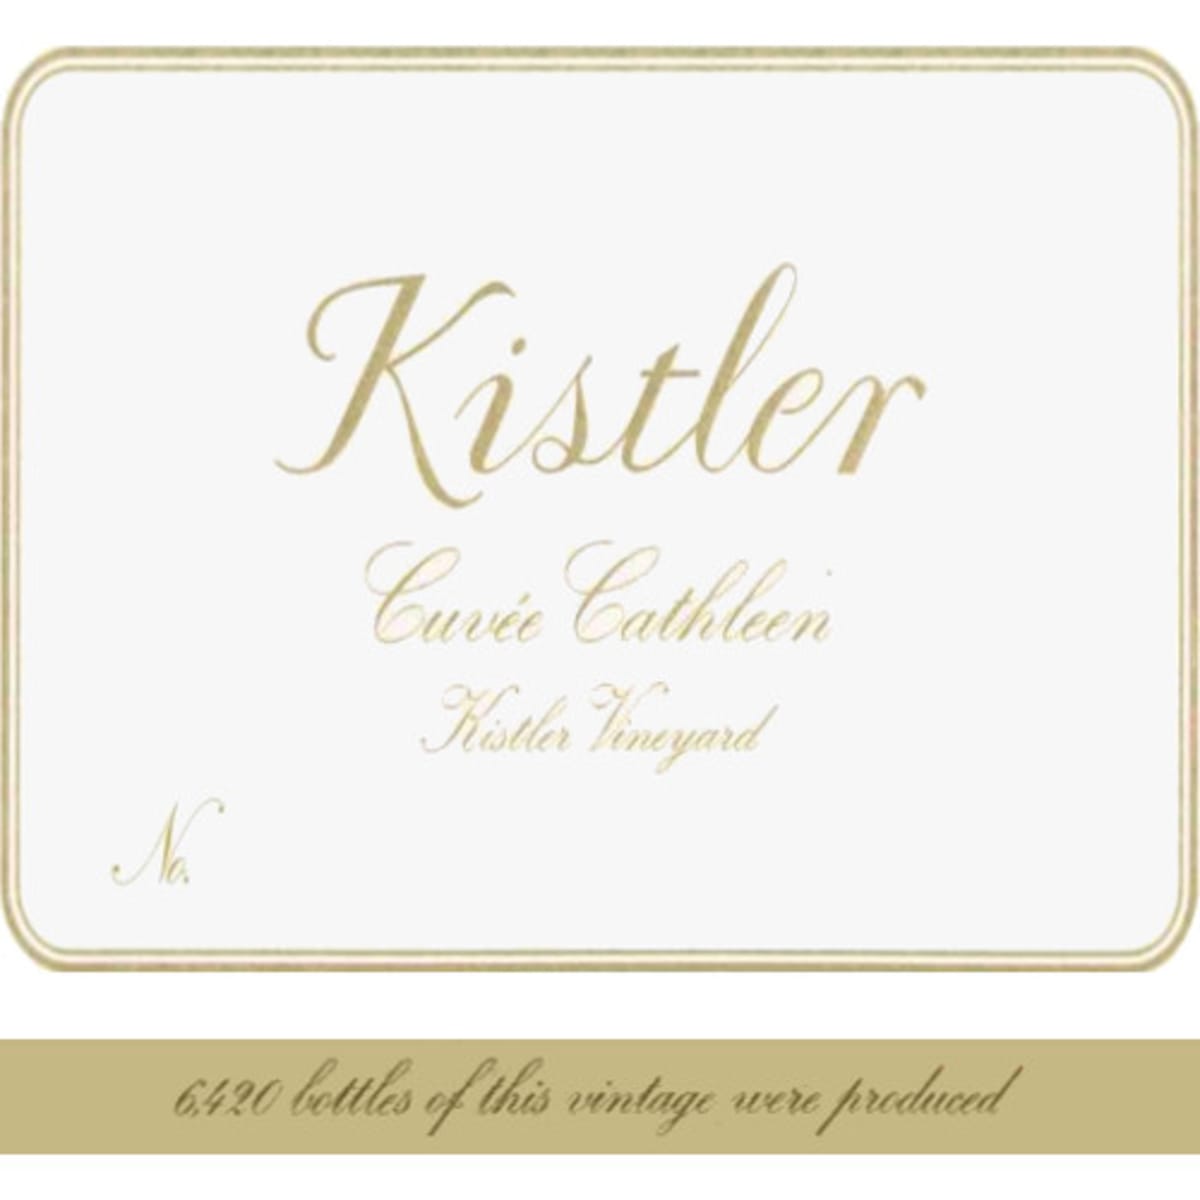 Kistler Vineyards Cuvee Cathleen Chardonnay 2004 Front Label